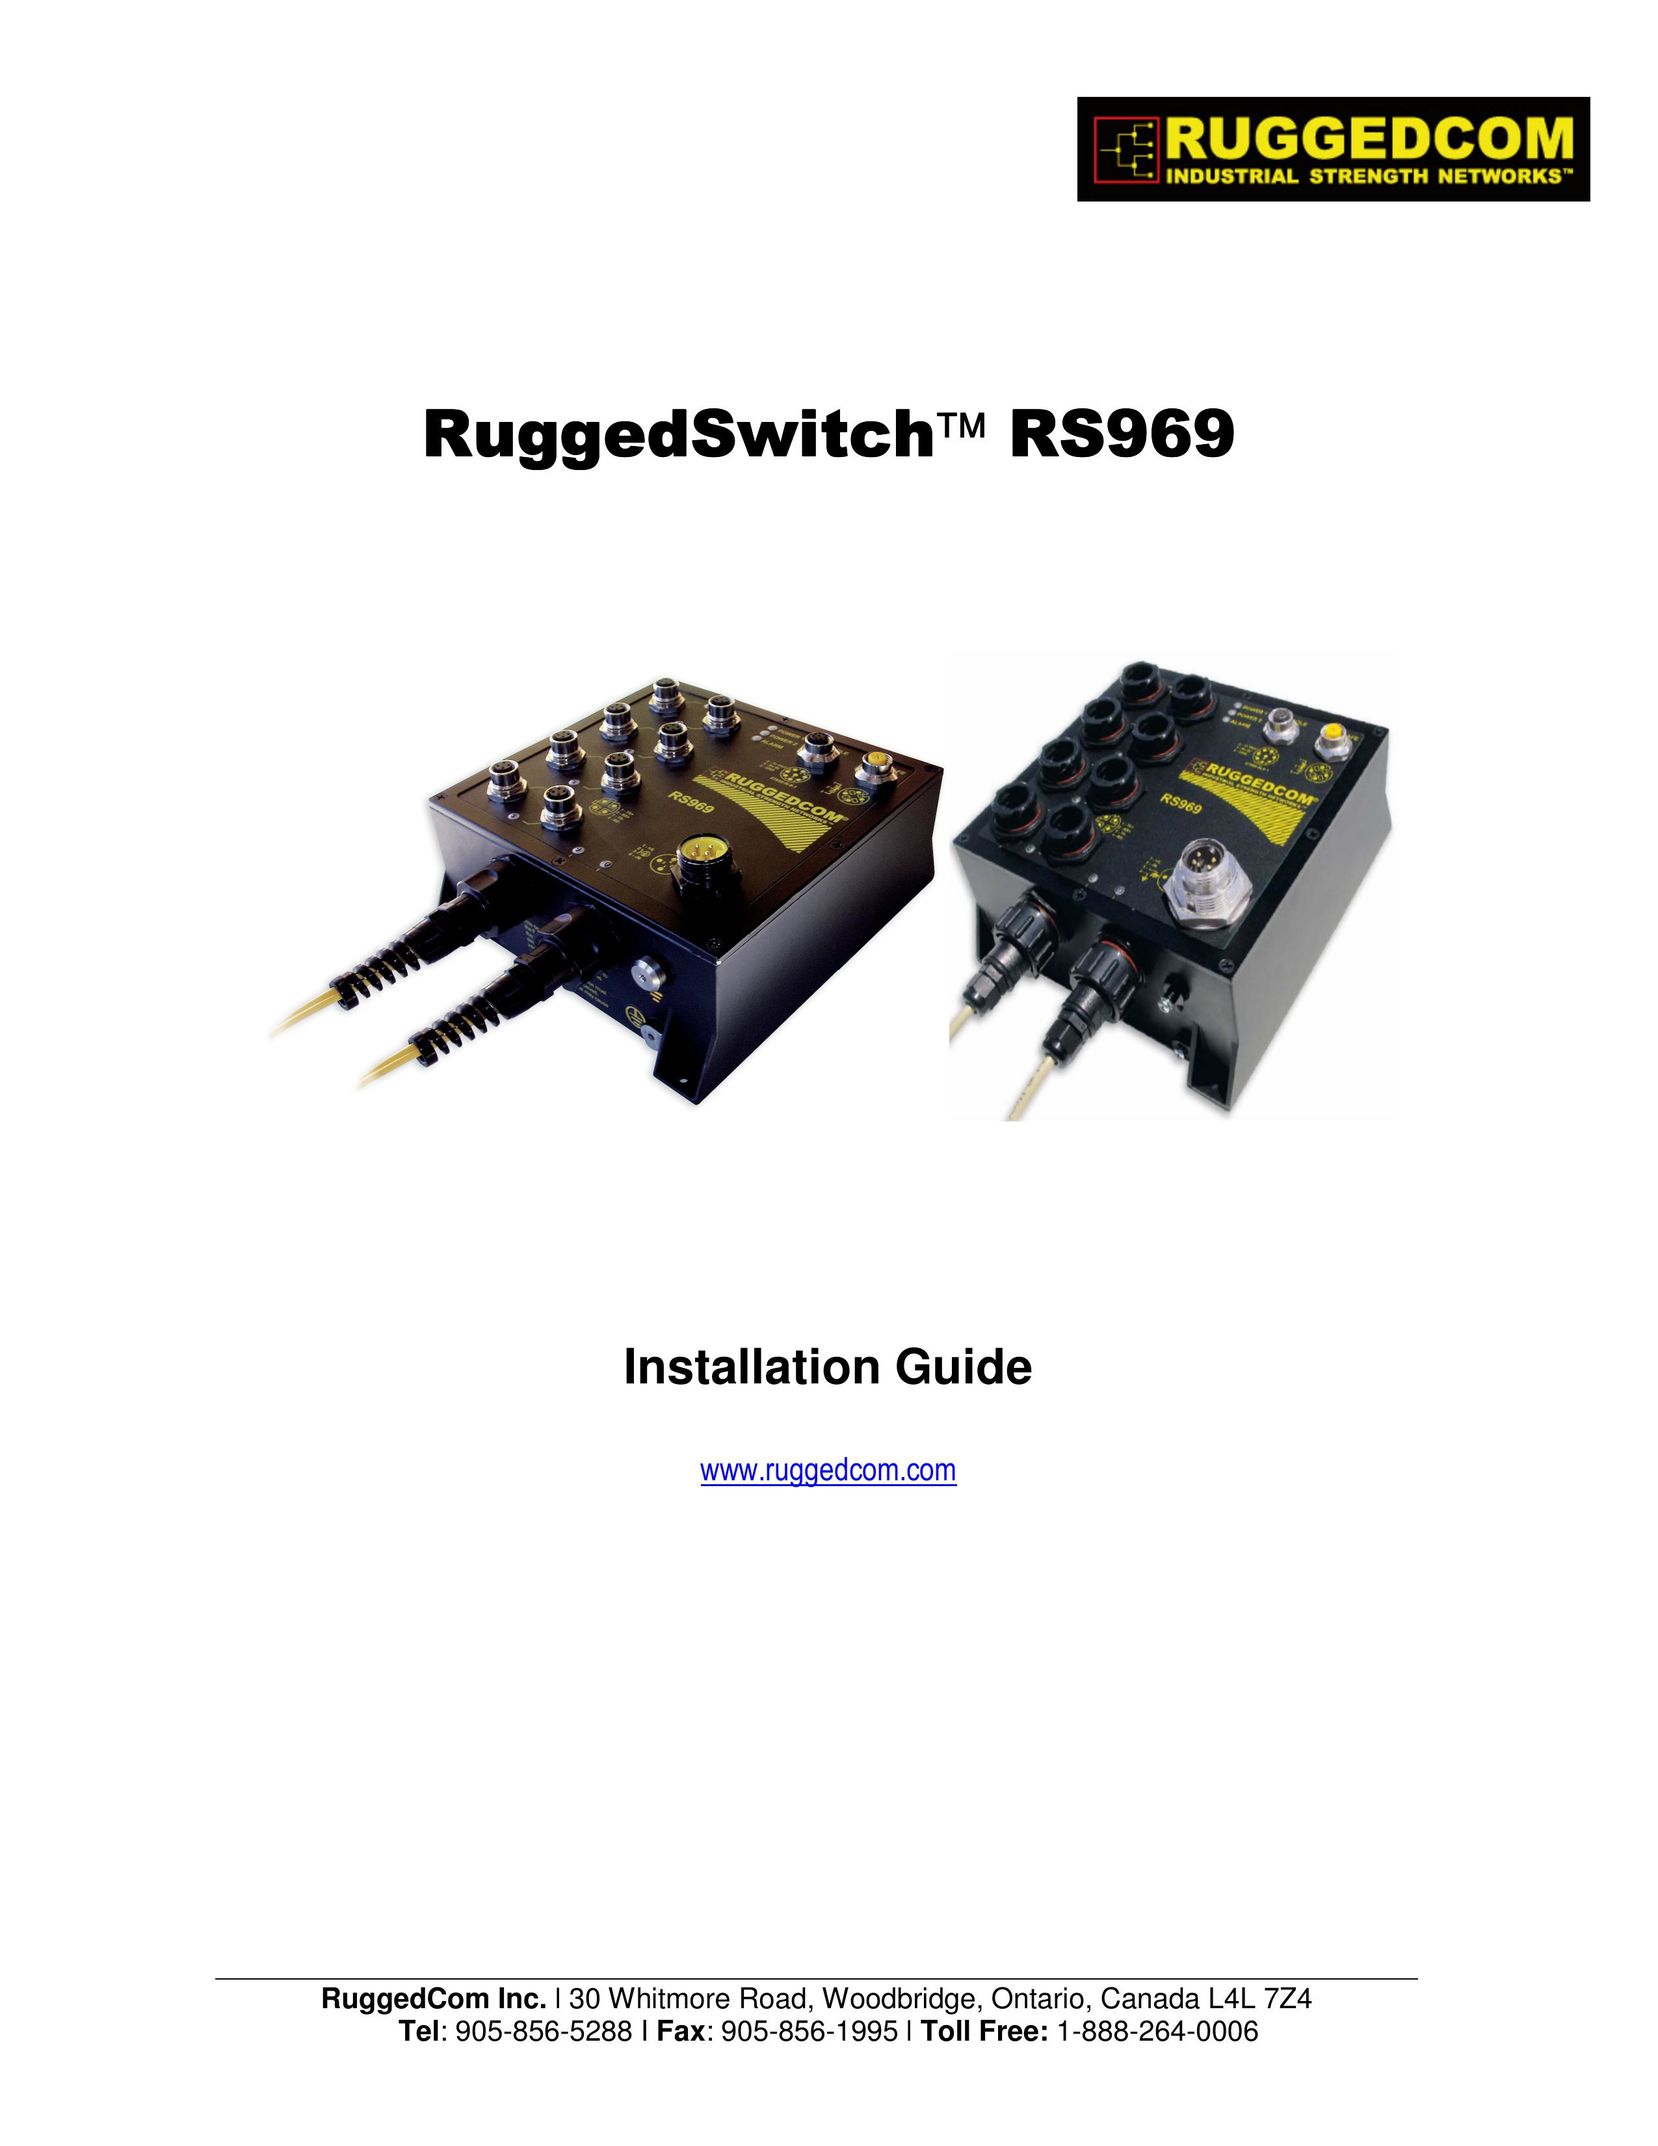 RuggedCom RS969 Switch User Manual